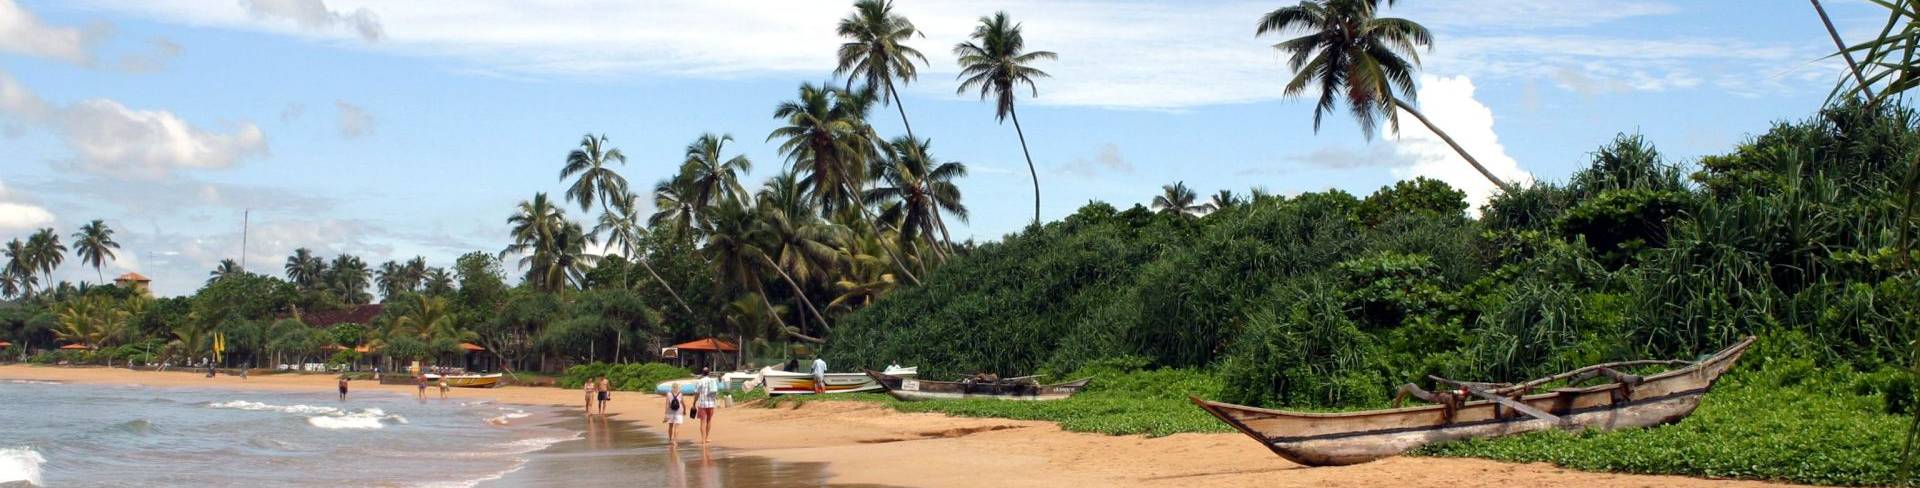 Бентота - пляжный курорт на Шри-Ланке